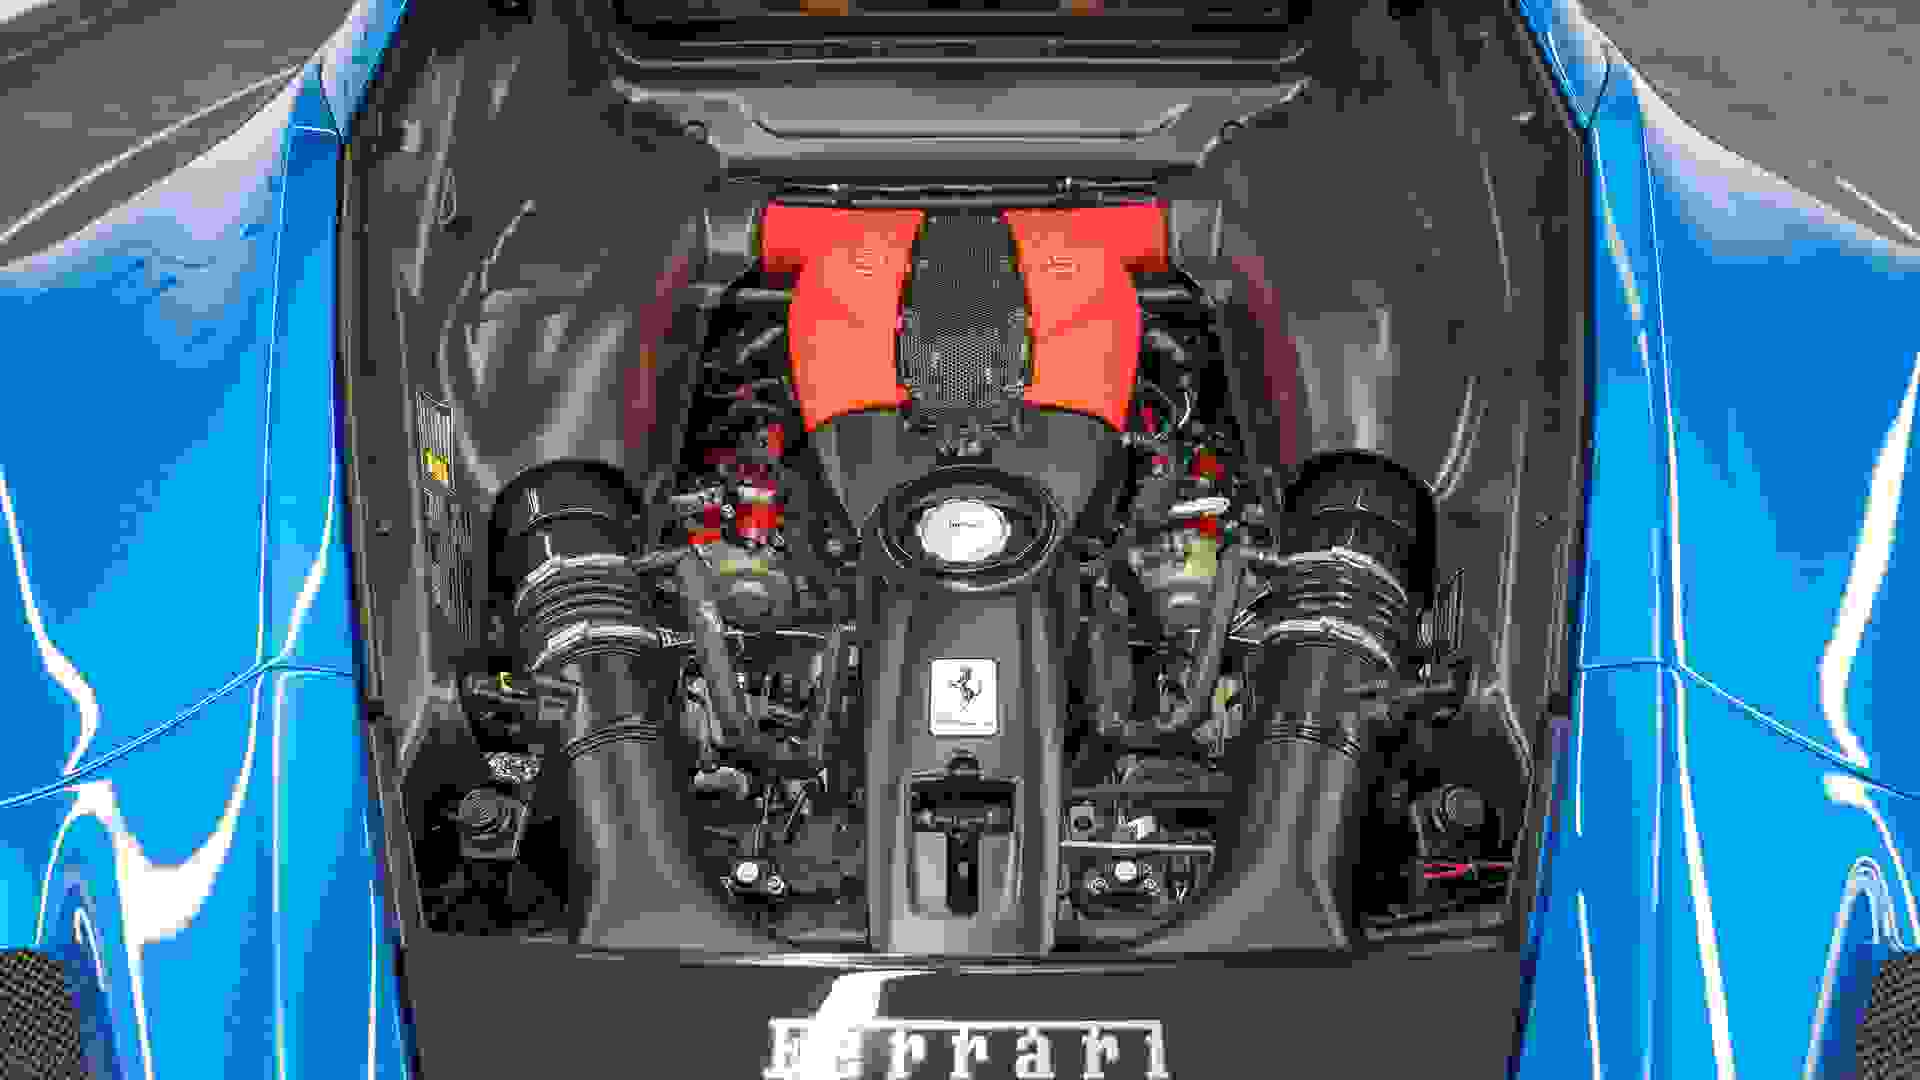 Ferrari F8 Photo ffc742e6-abe4-484d-8272-534c5c8553e3.jpg